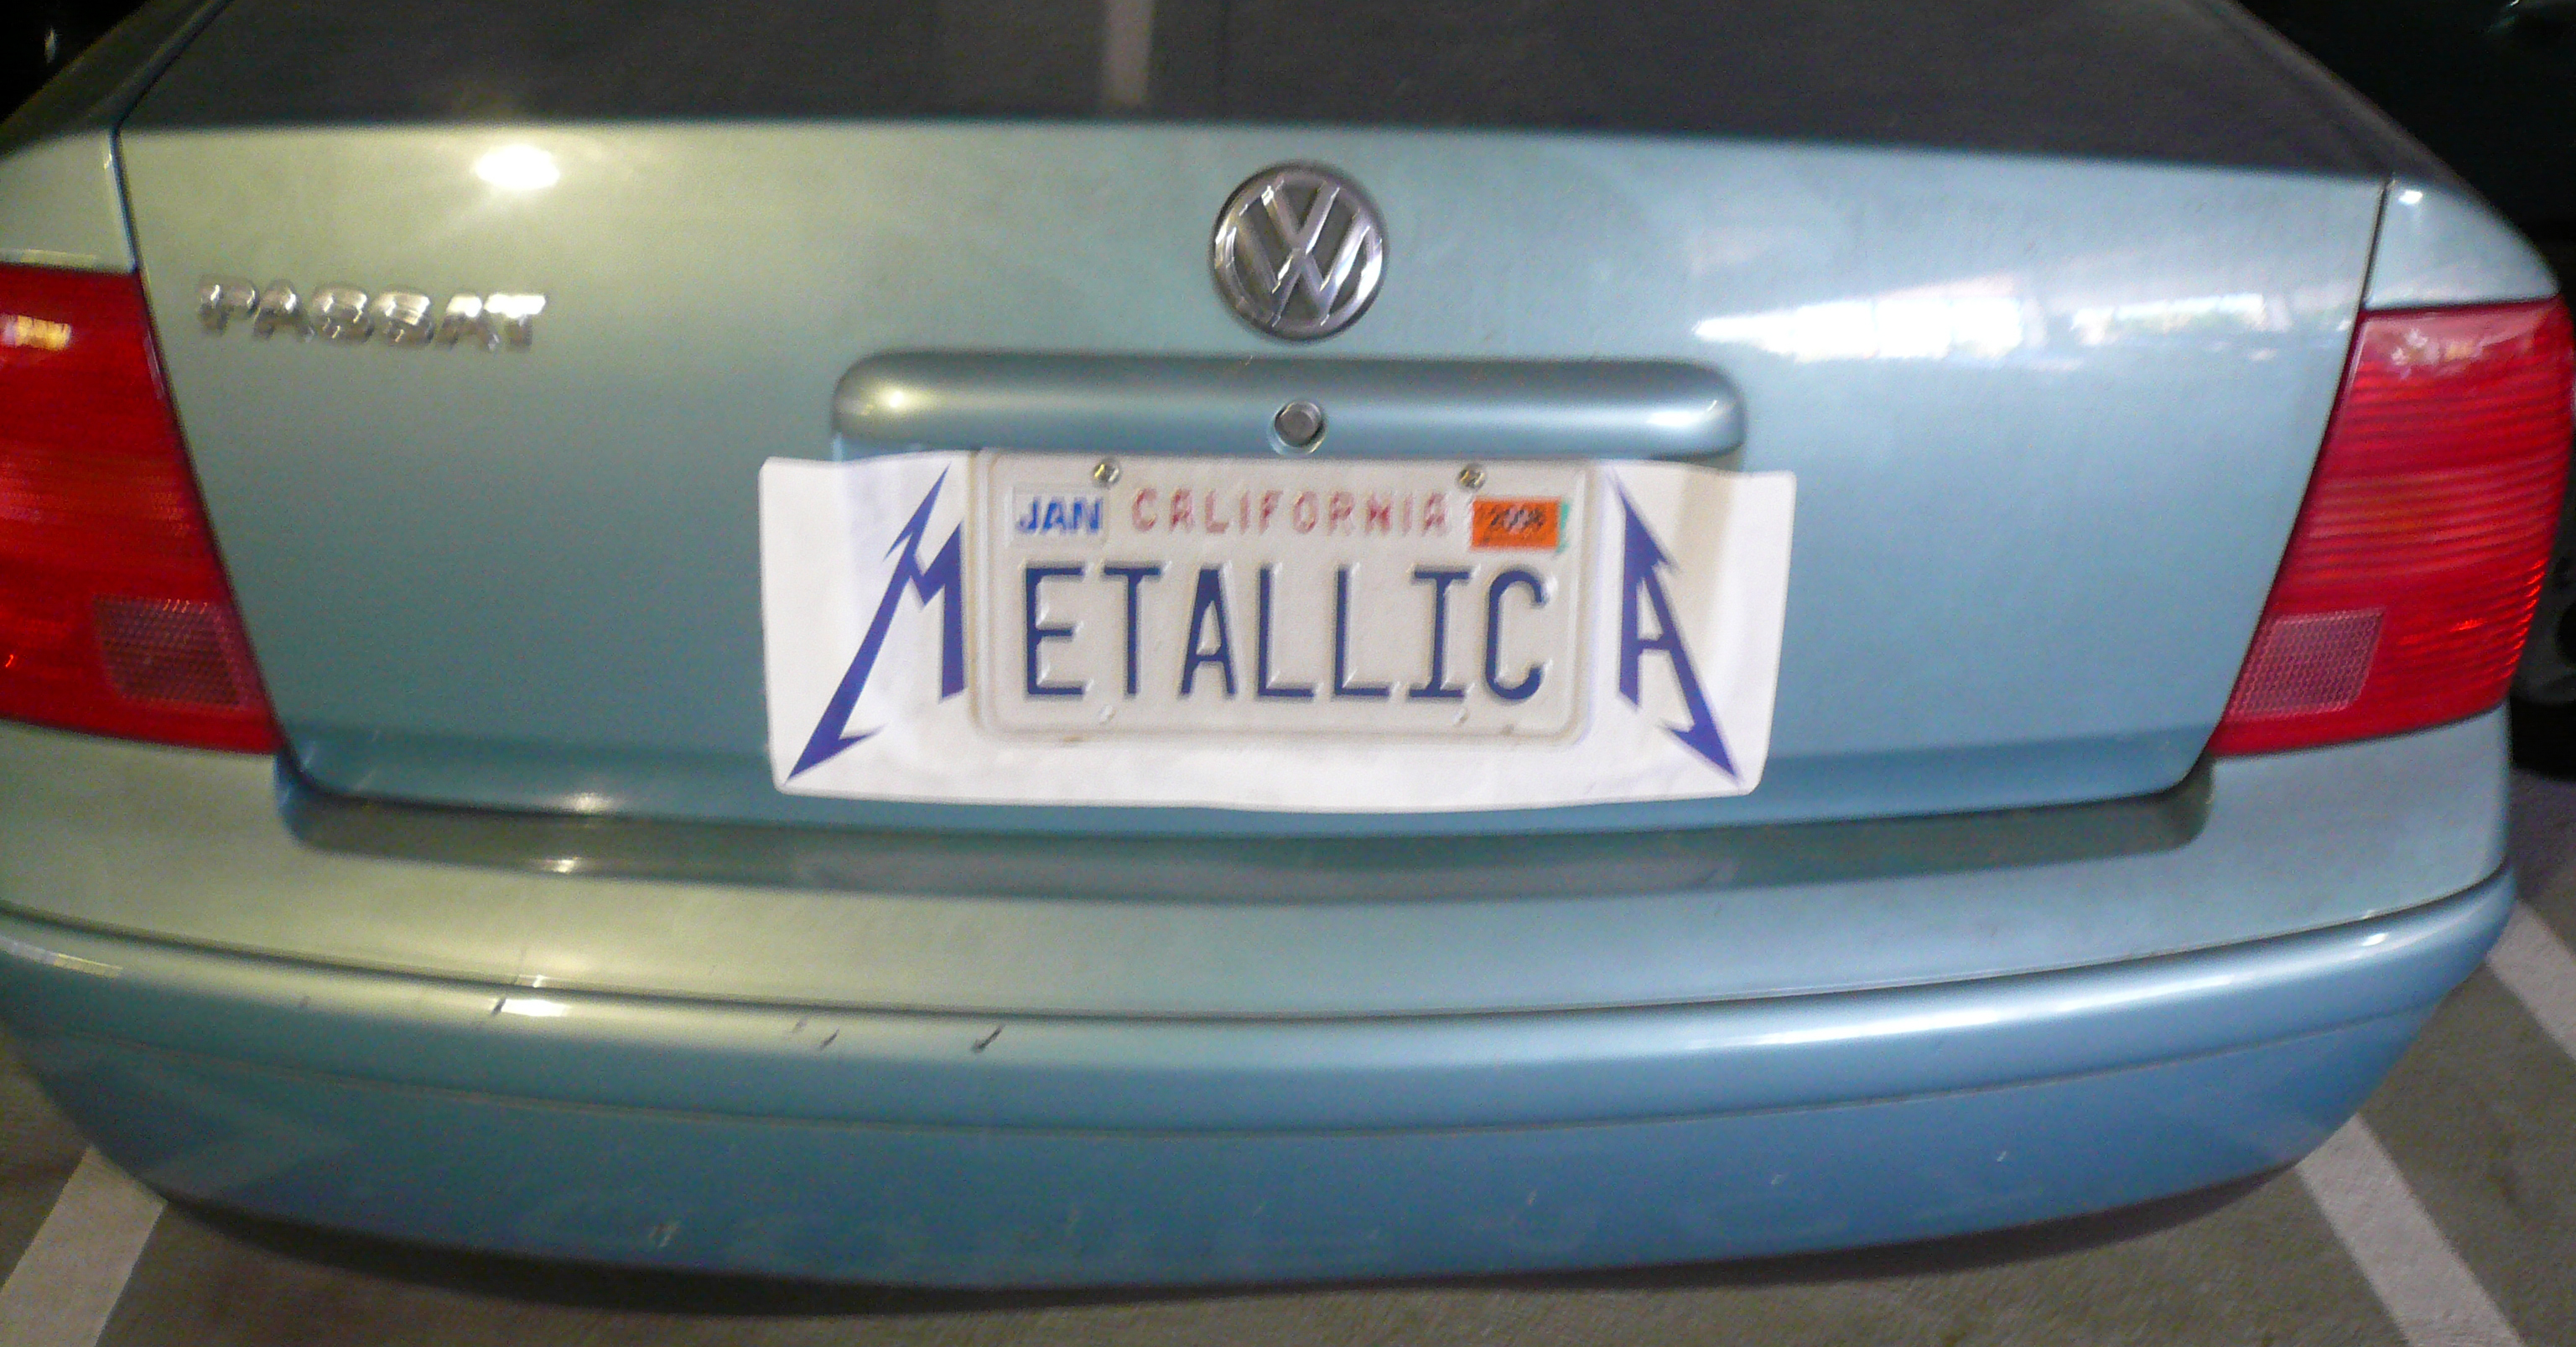 metallica-license-plate.jpg